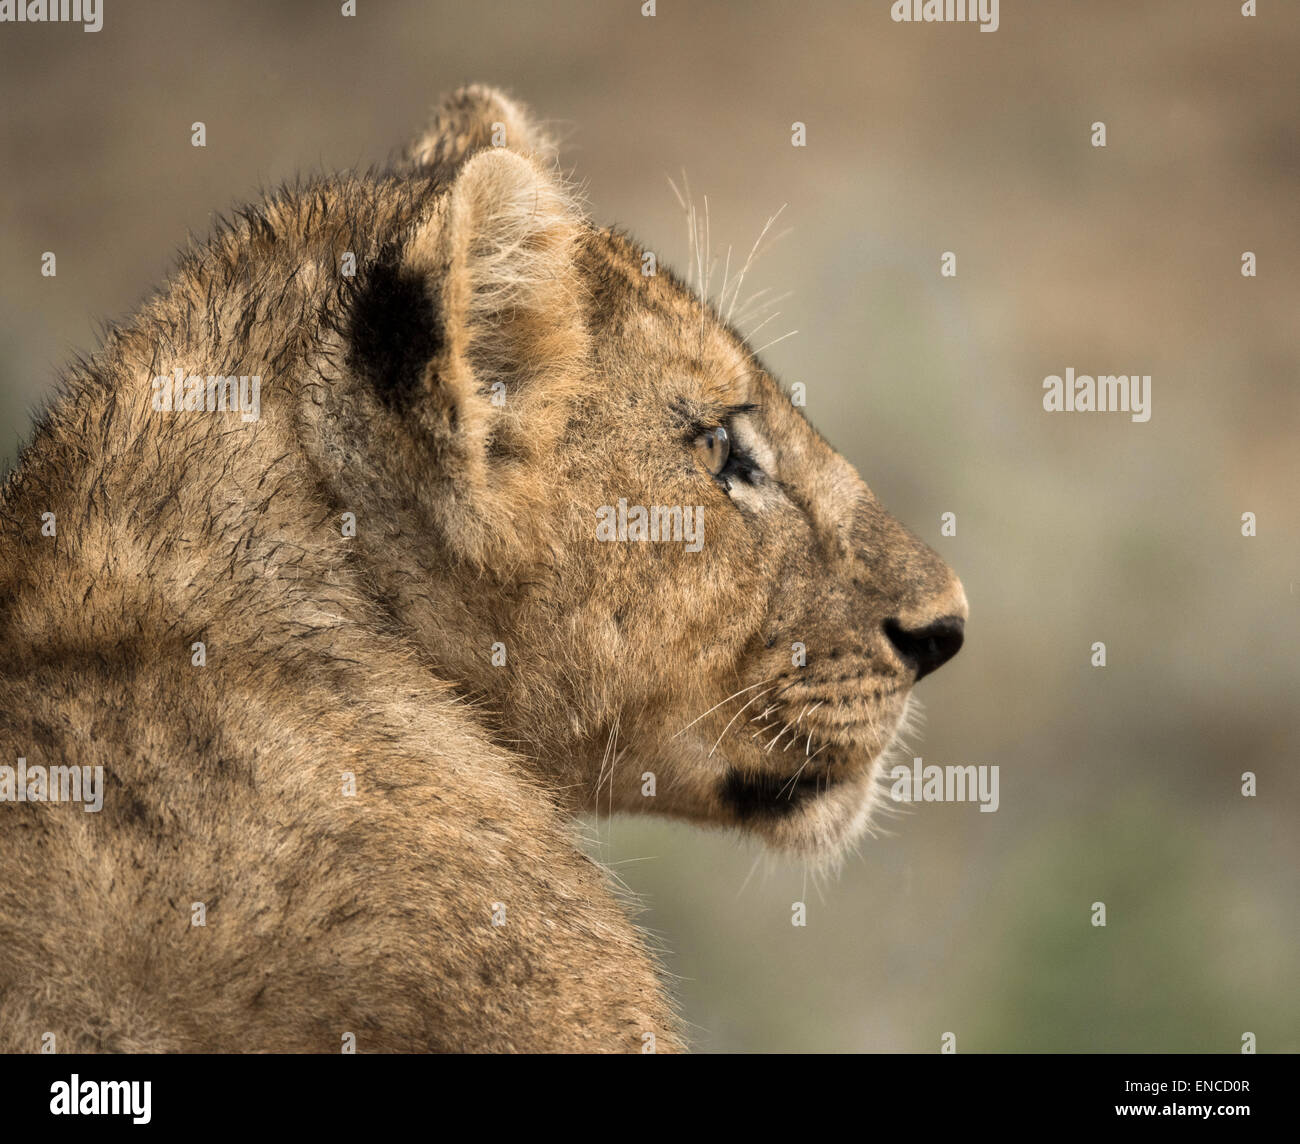 Nahaufnahme eines jungen Löwen, Serengeti, Tansania, Afrika Stockfoto